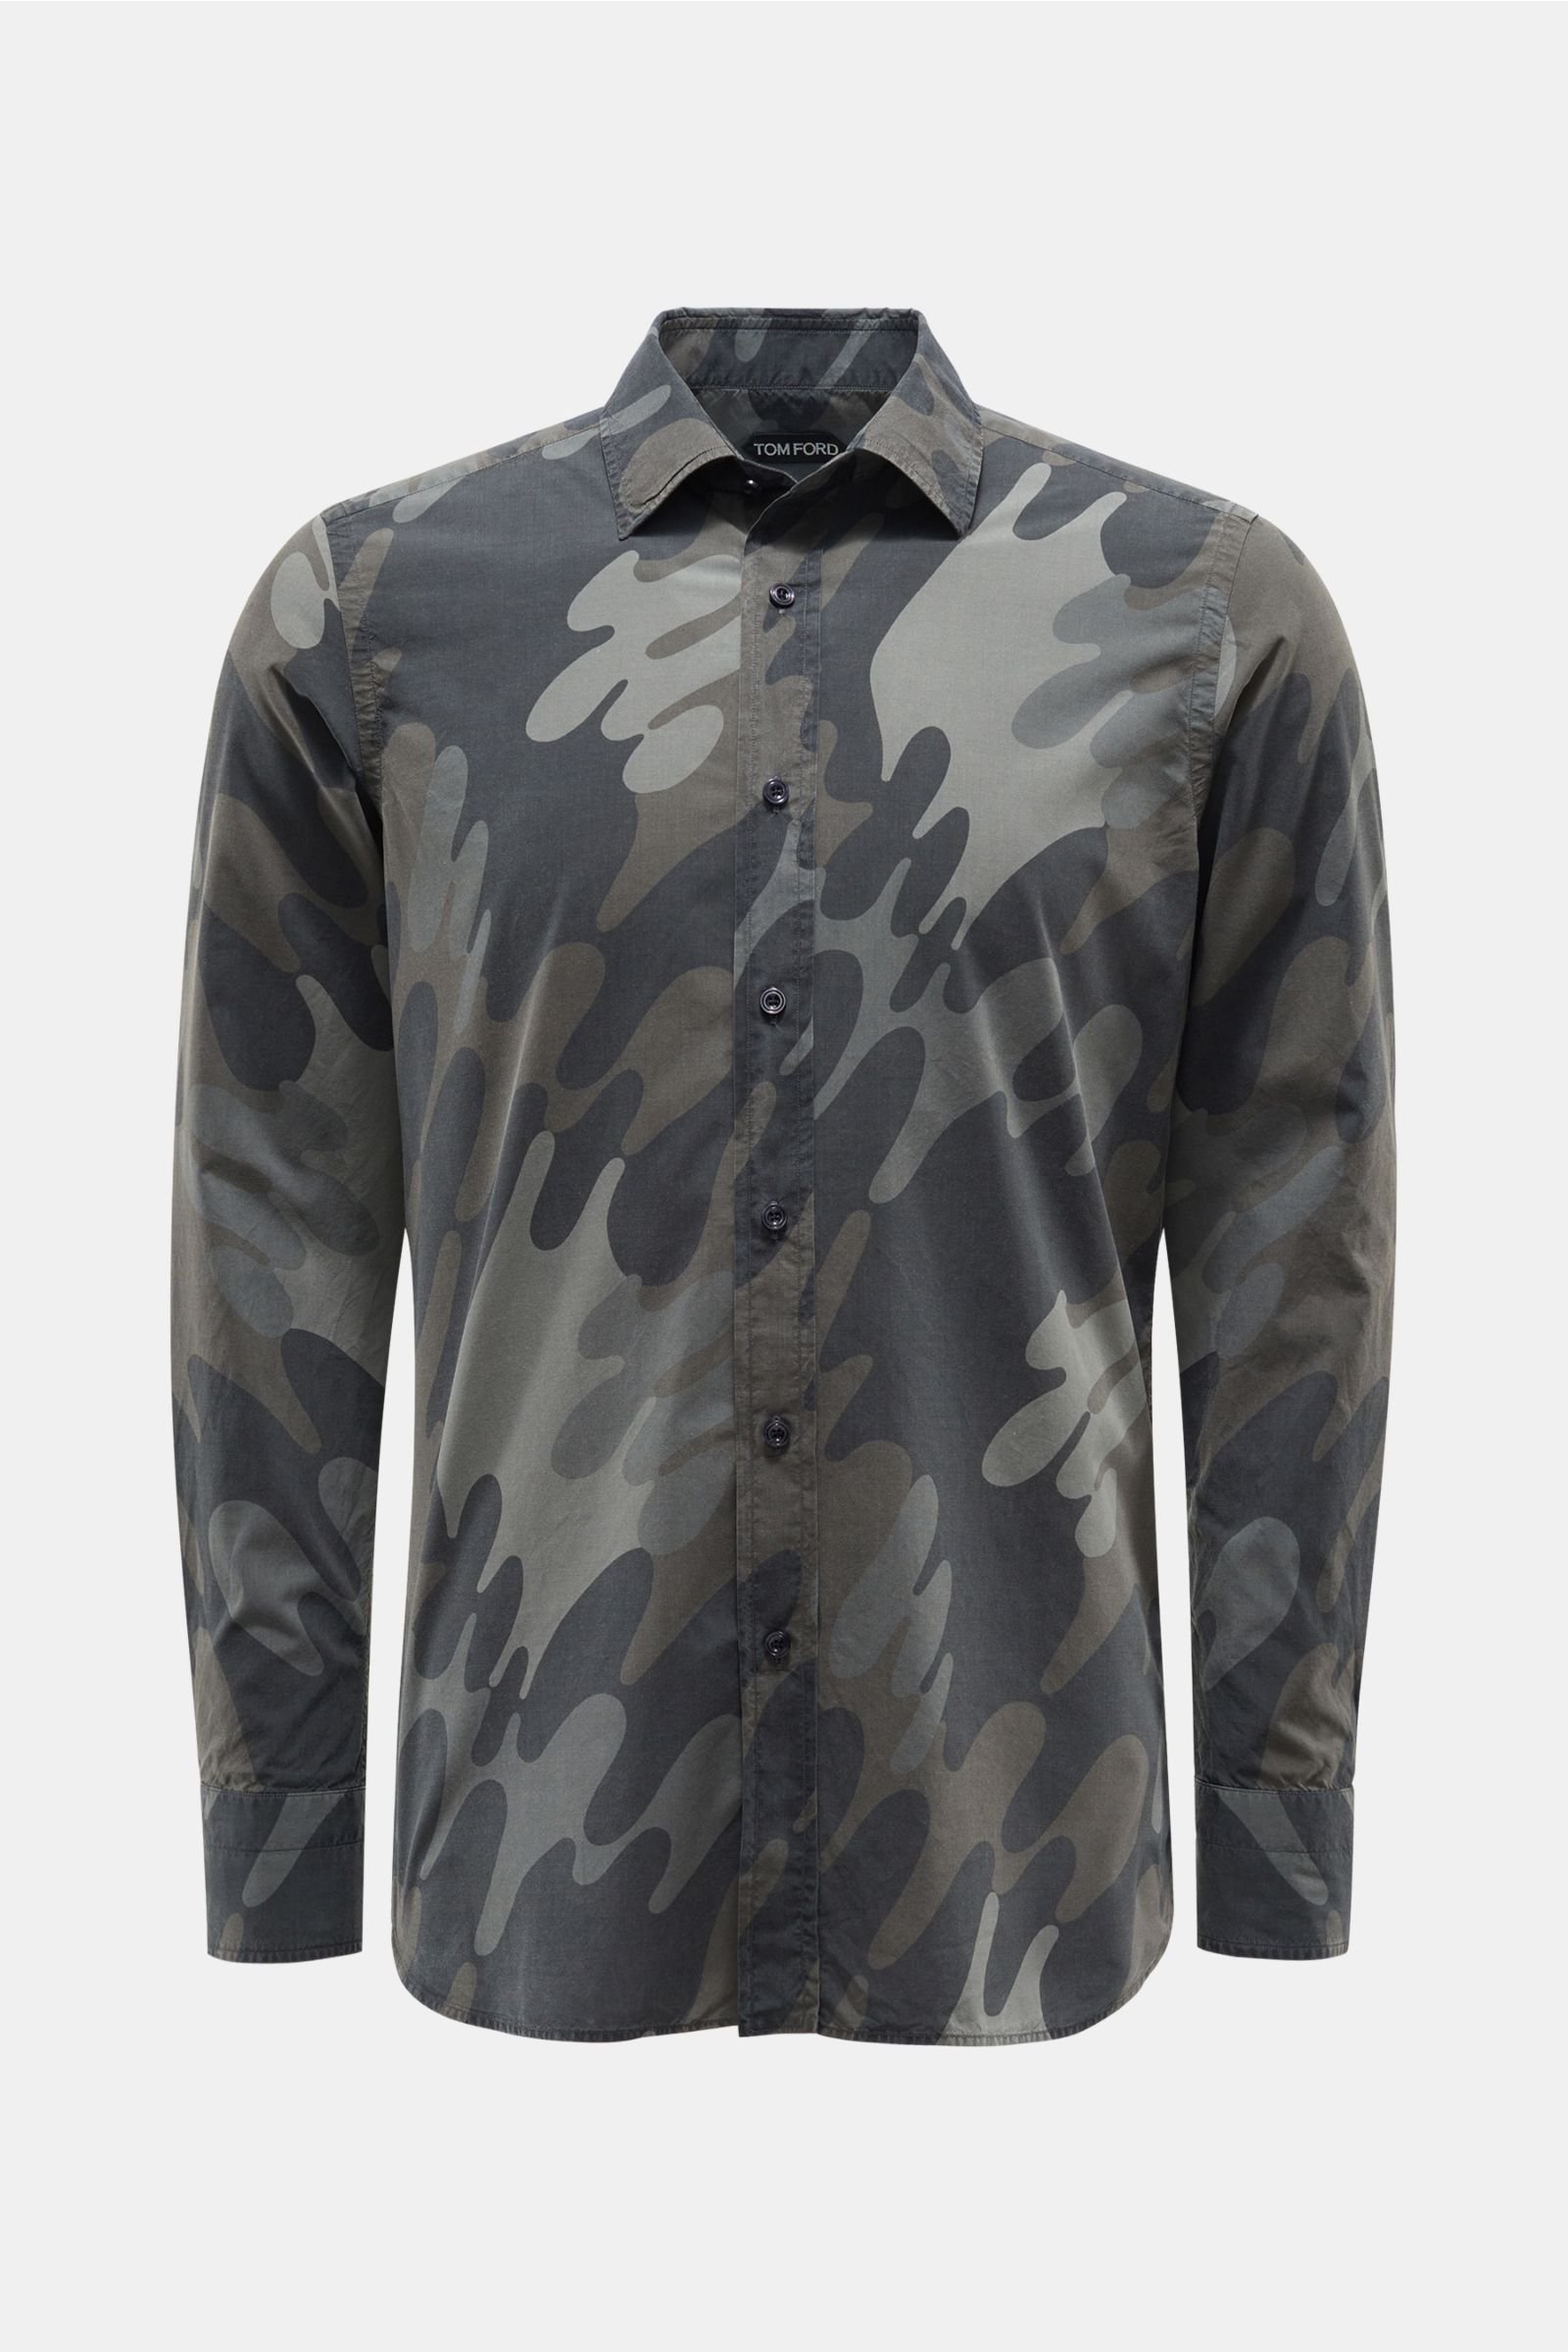 TOM FORD casual shirt Kent collar dark grey patterned | BRAUN Hamburg